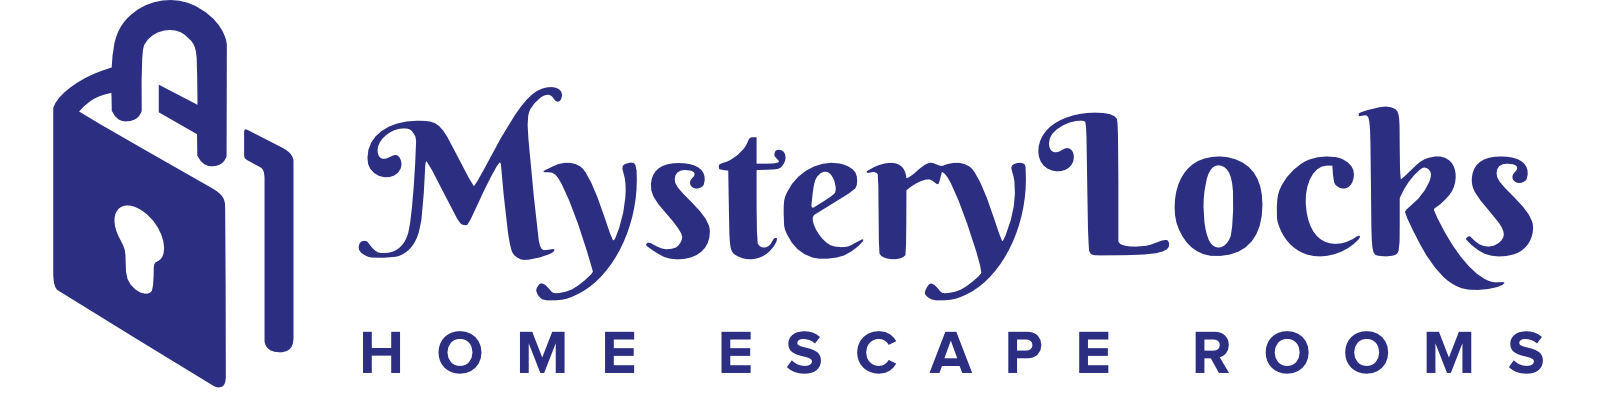 MysteryLocks Home Escape Rooms